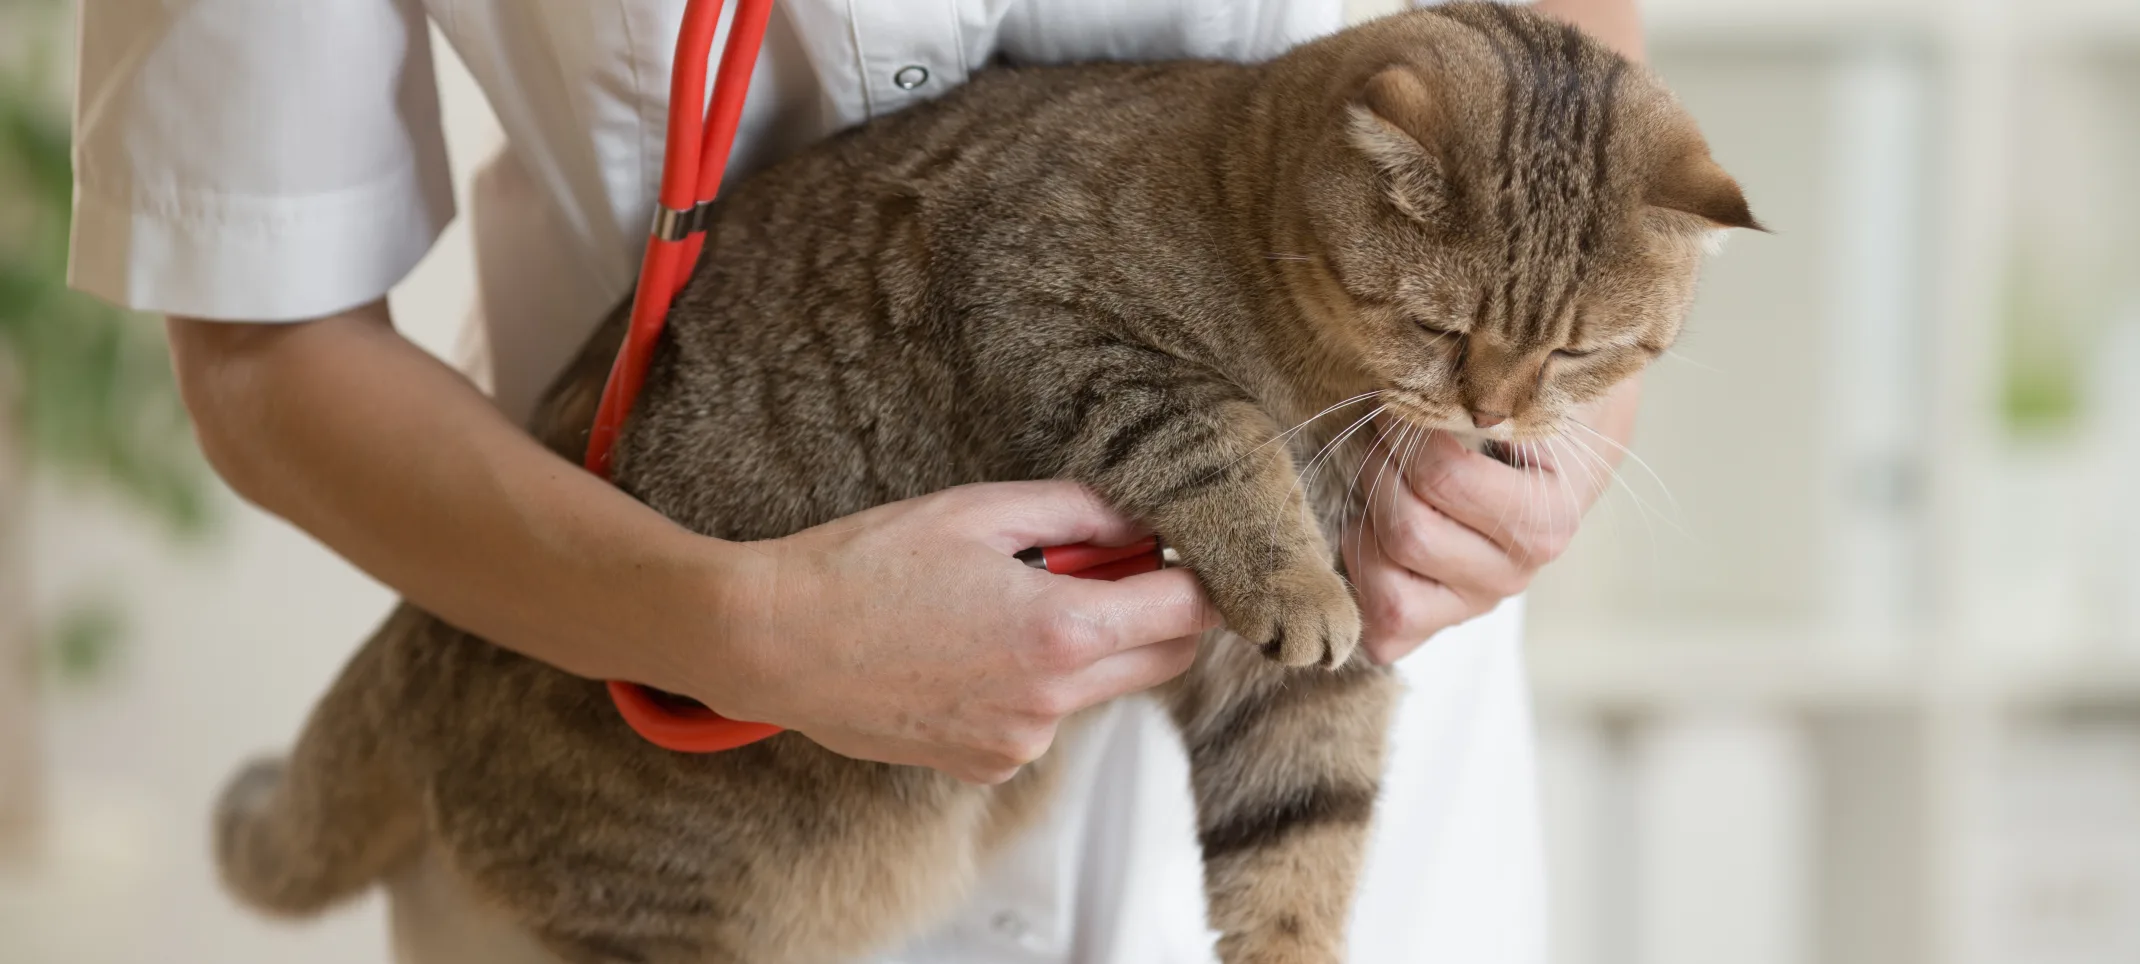 Cat receiving a checkup